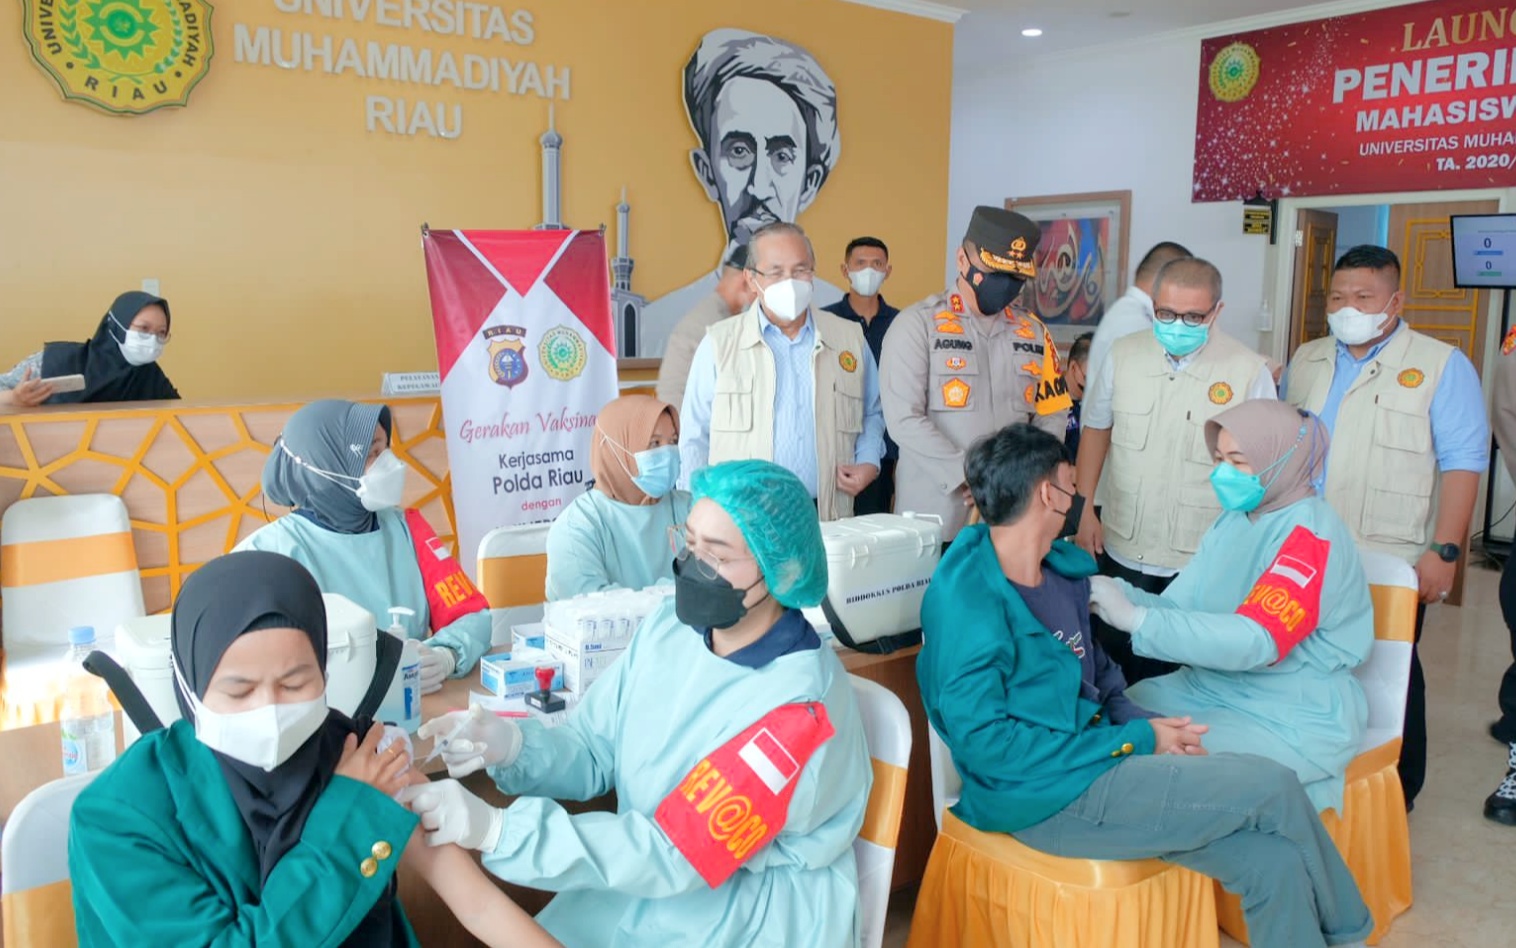 Gandeng UMRI, Polda Riau Gelar Vaksinasi Massal untuk Percepatan Herd Immunity Lingkungan Kampus